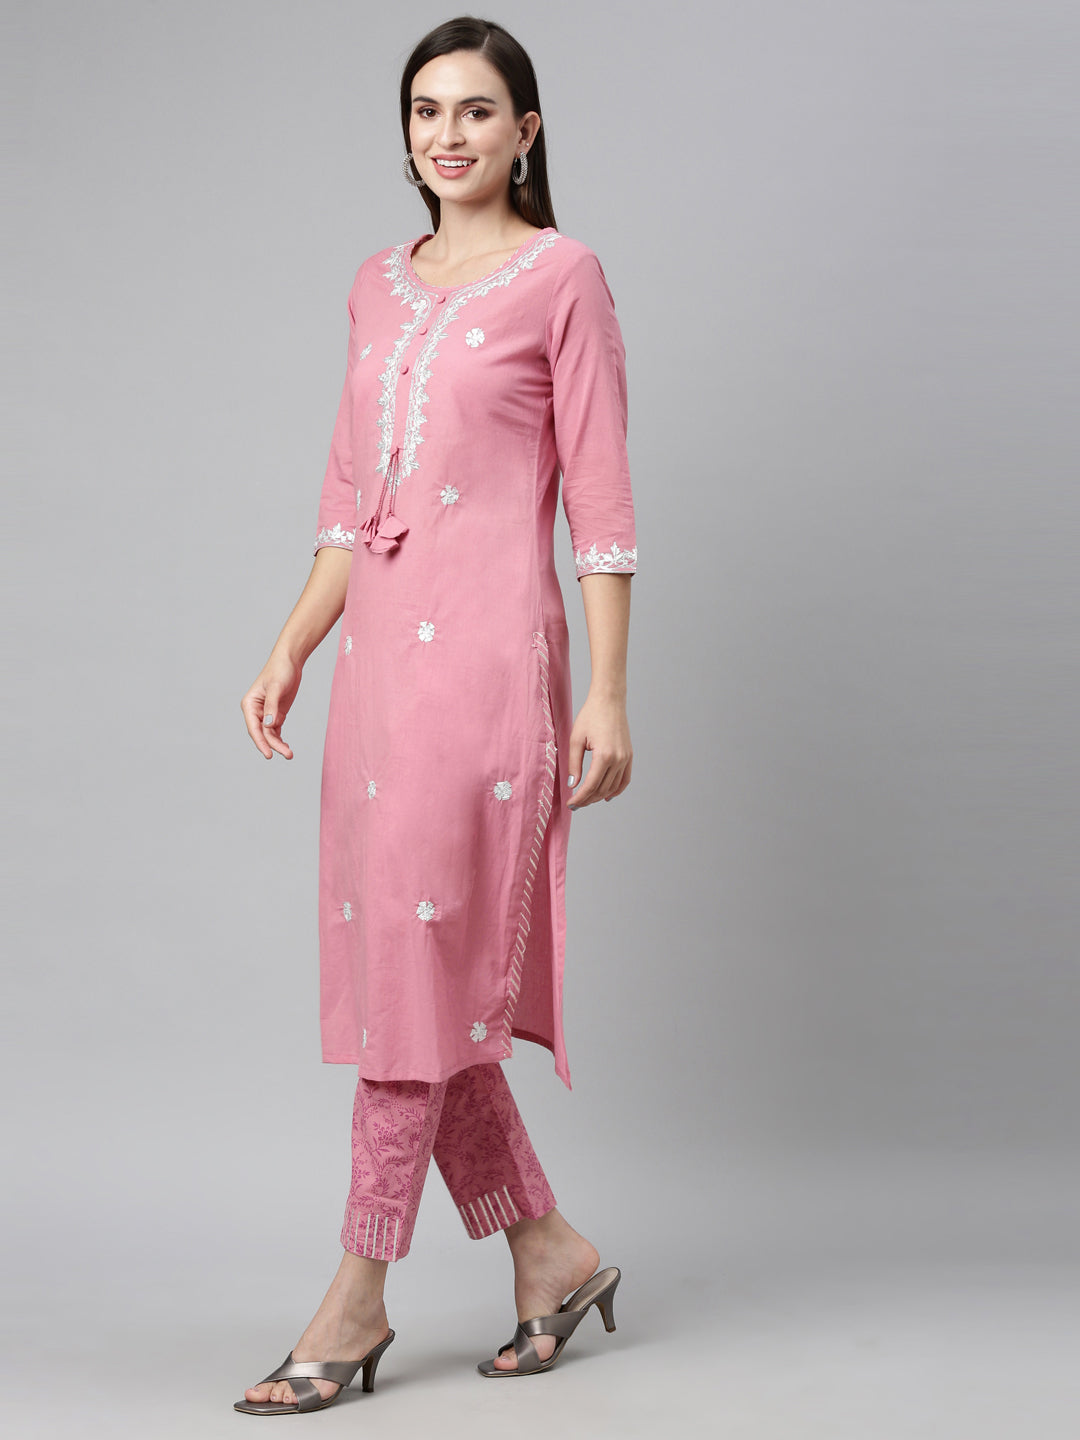 Neeru'S PINK color, Jute Cotton fabric Kurta Sets